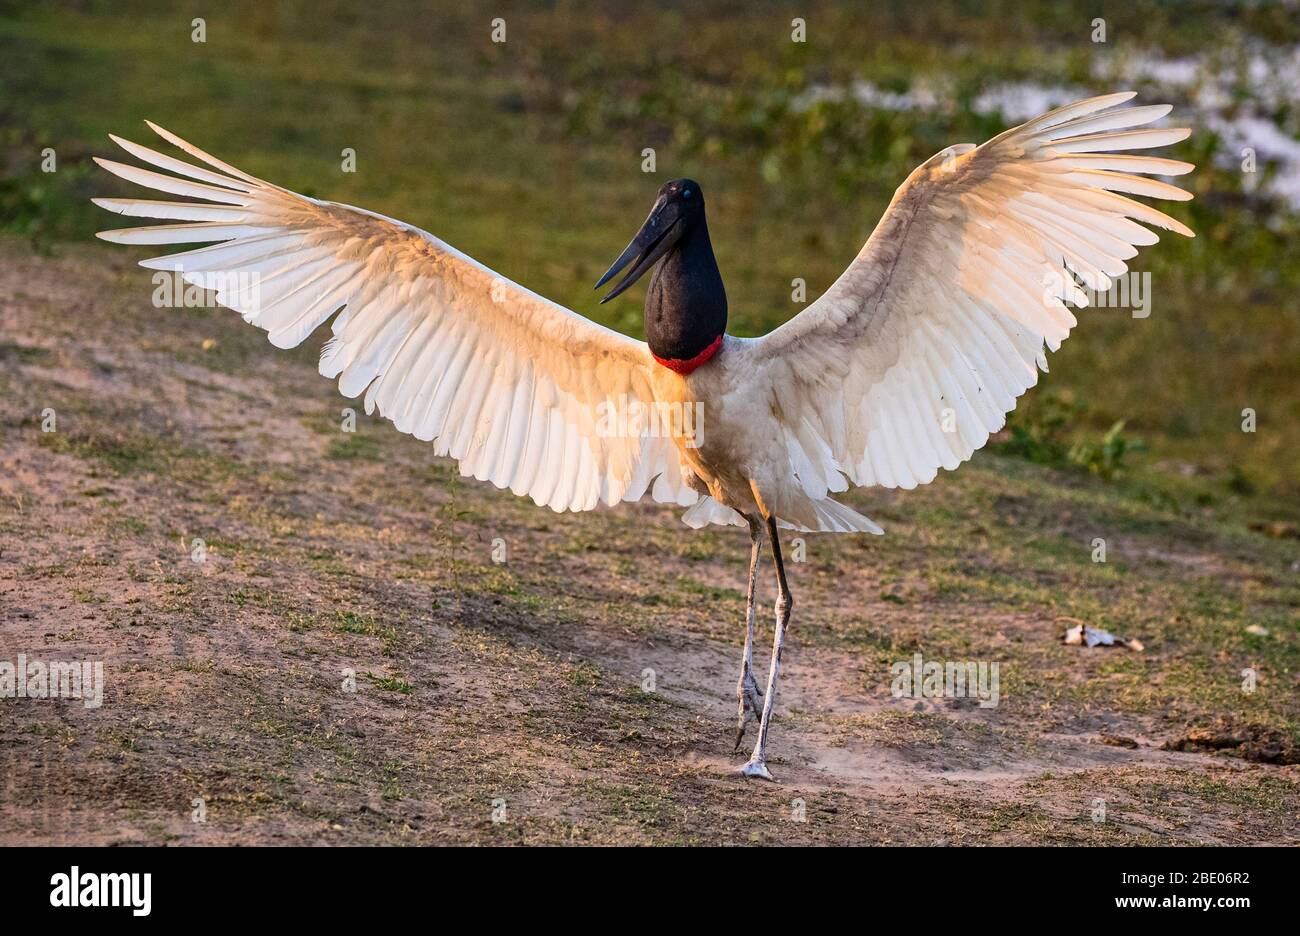 Retrato de Jabiru Stork con alas esparcidos, Pantanal, Brasil Foto de stock